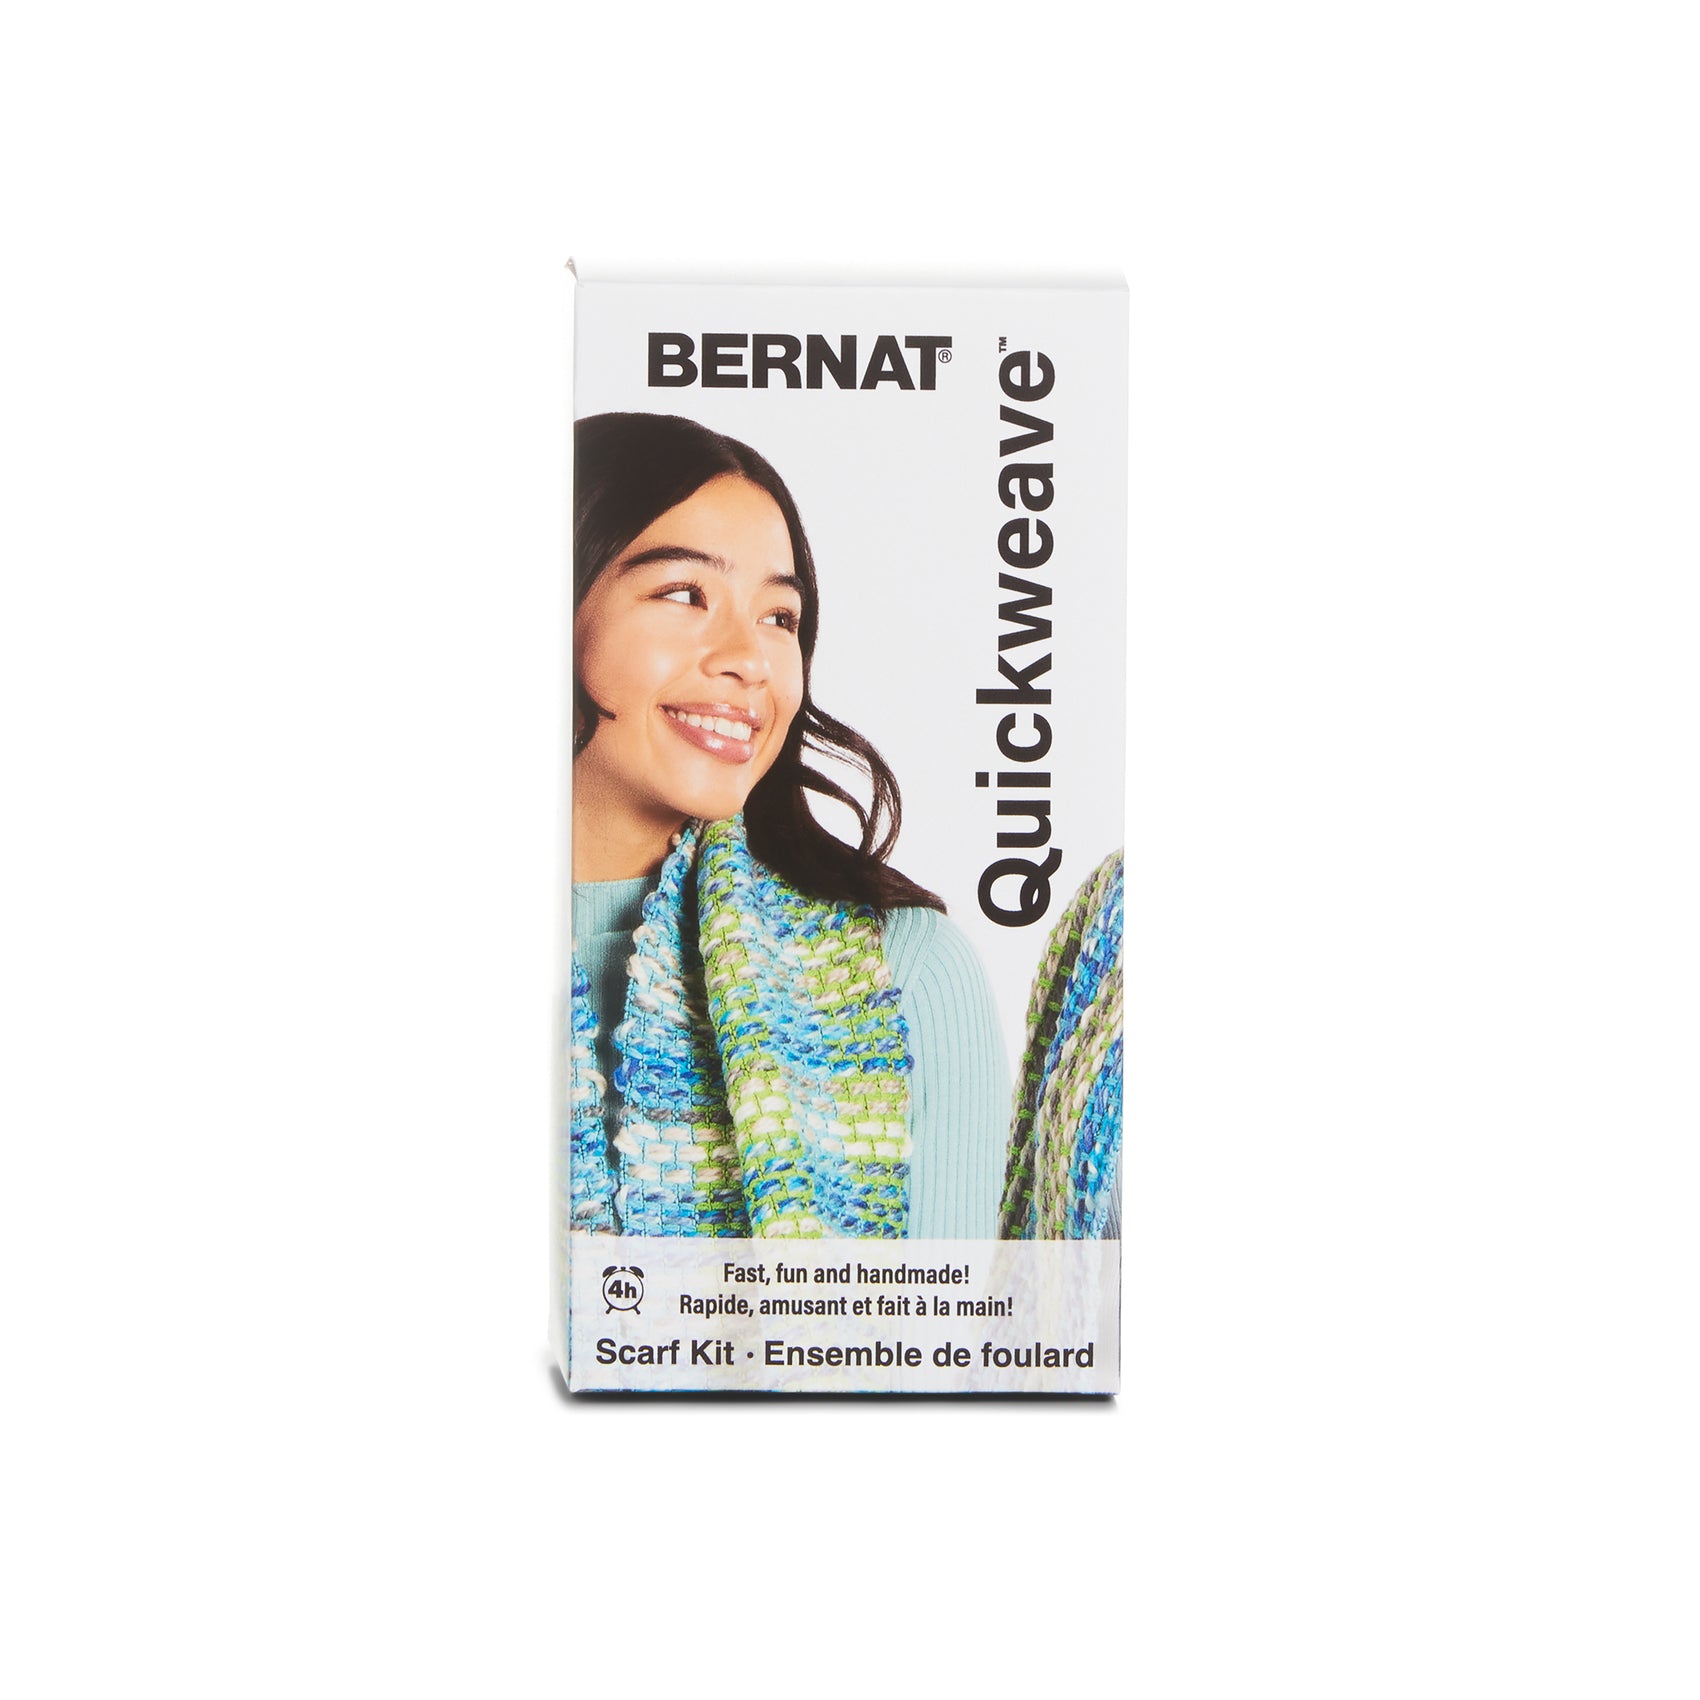 Bernat Quickweave Scarf Weaving Kit (140G/4.9oz)